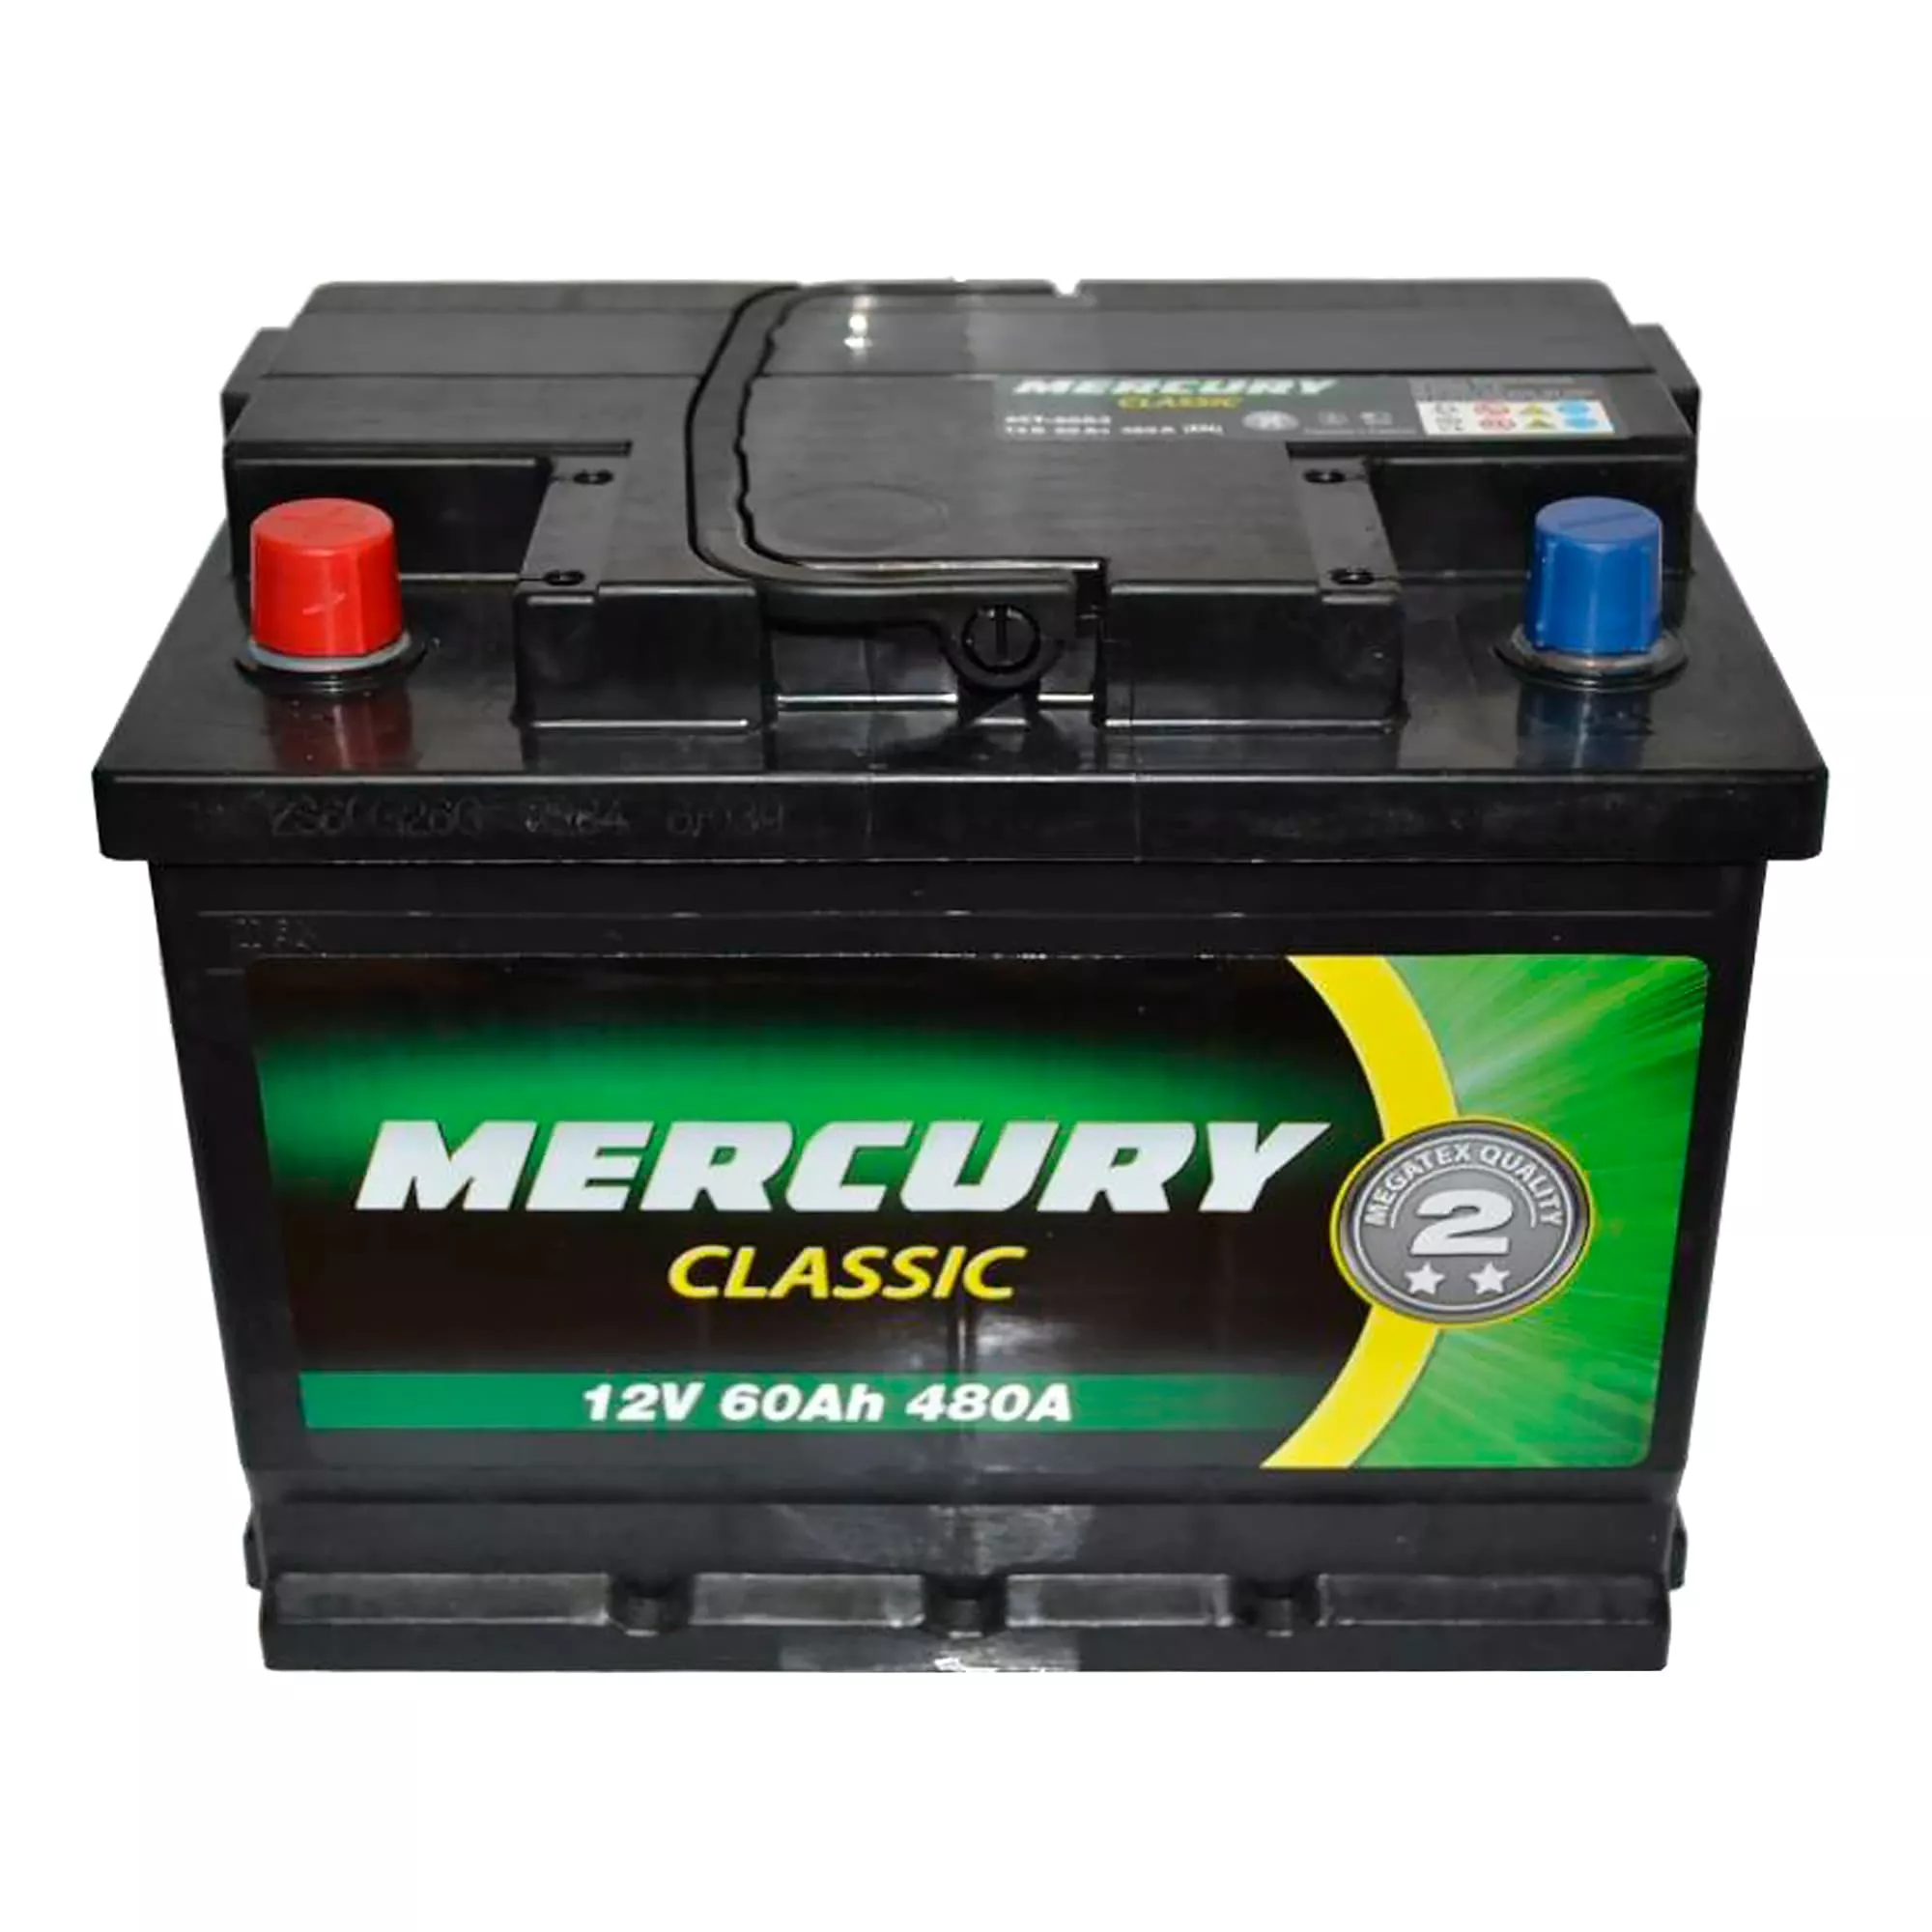 Автомобильный аккумулятор MERCURY CLASSIC 6СТ-60Ah 480A Аз (25918)